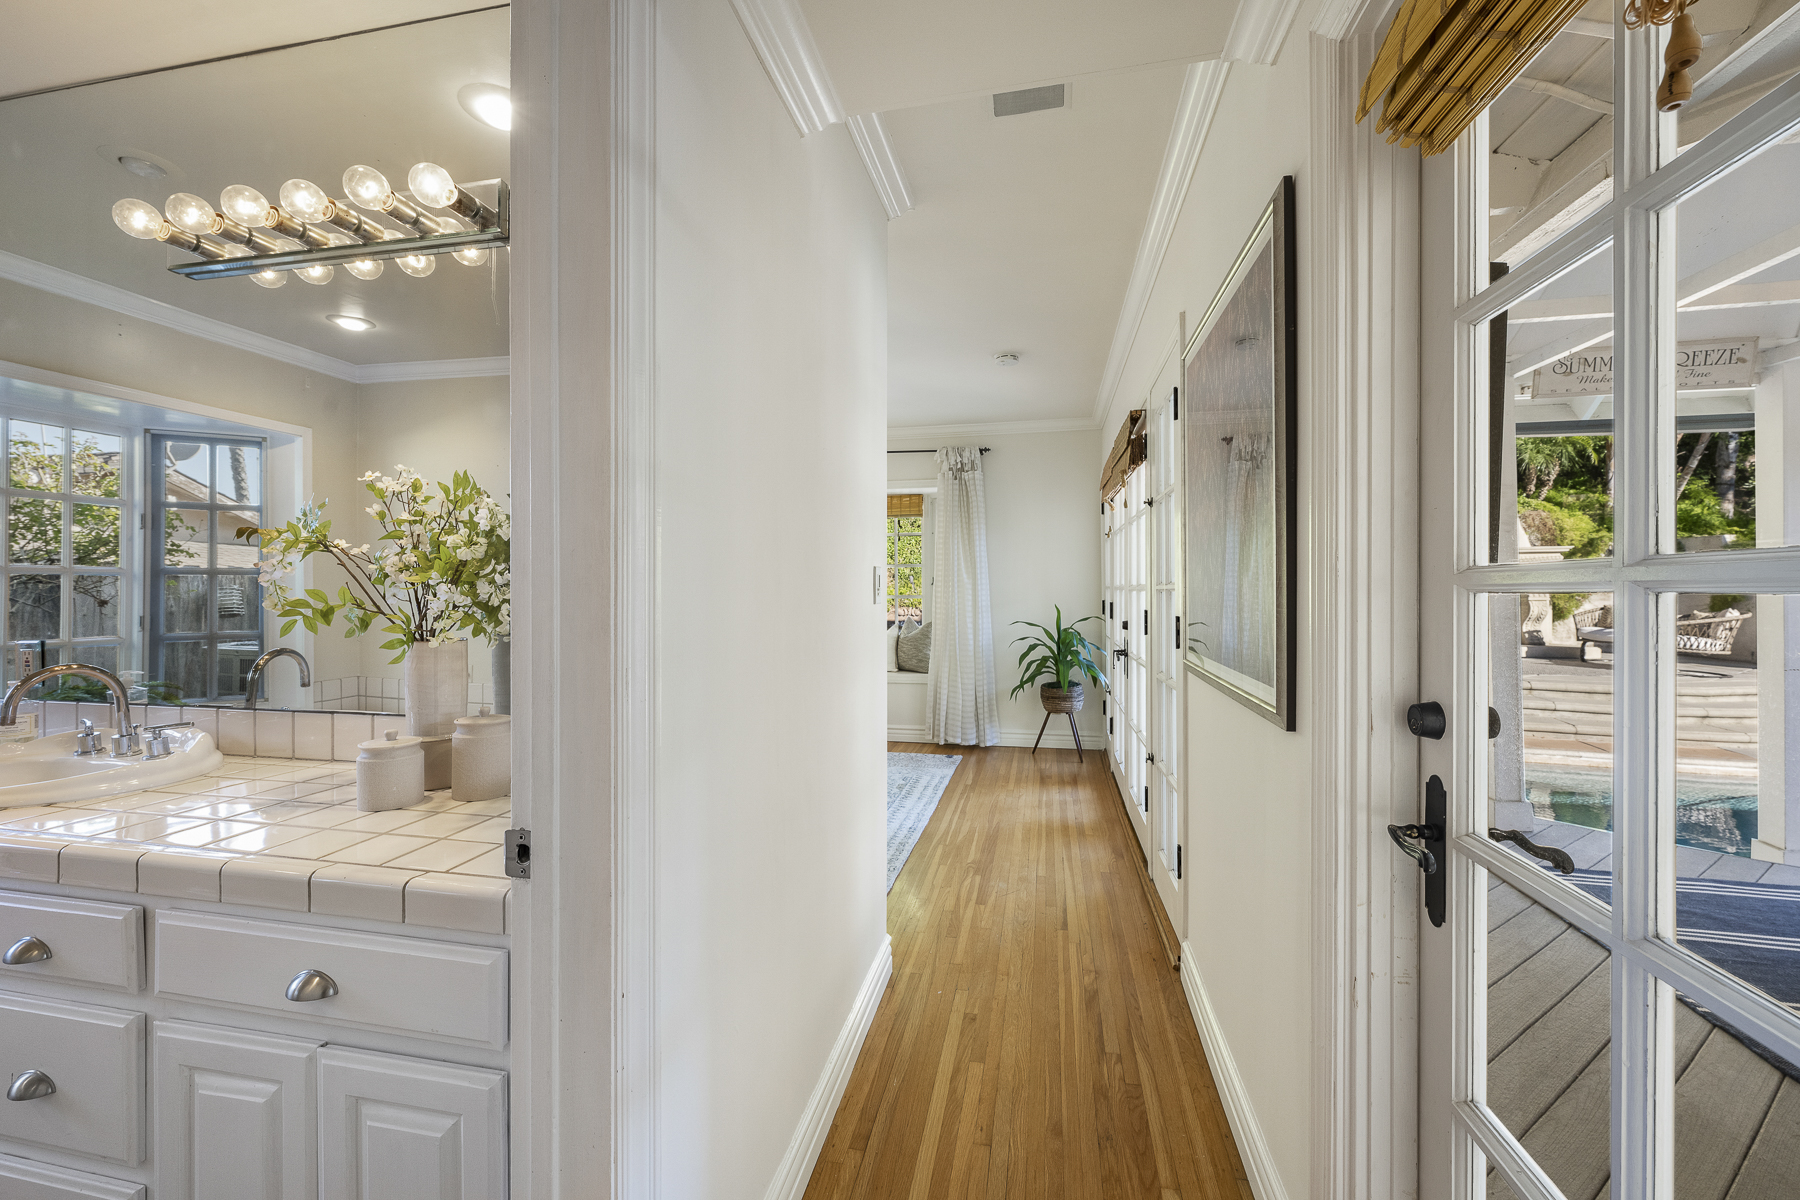 806 N. Adlena Drive, Fullerton, CA 92833: Interior shot of bedroom hallway and bathroom.